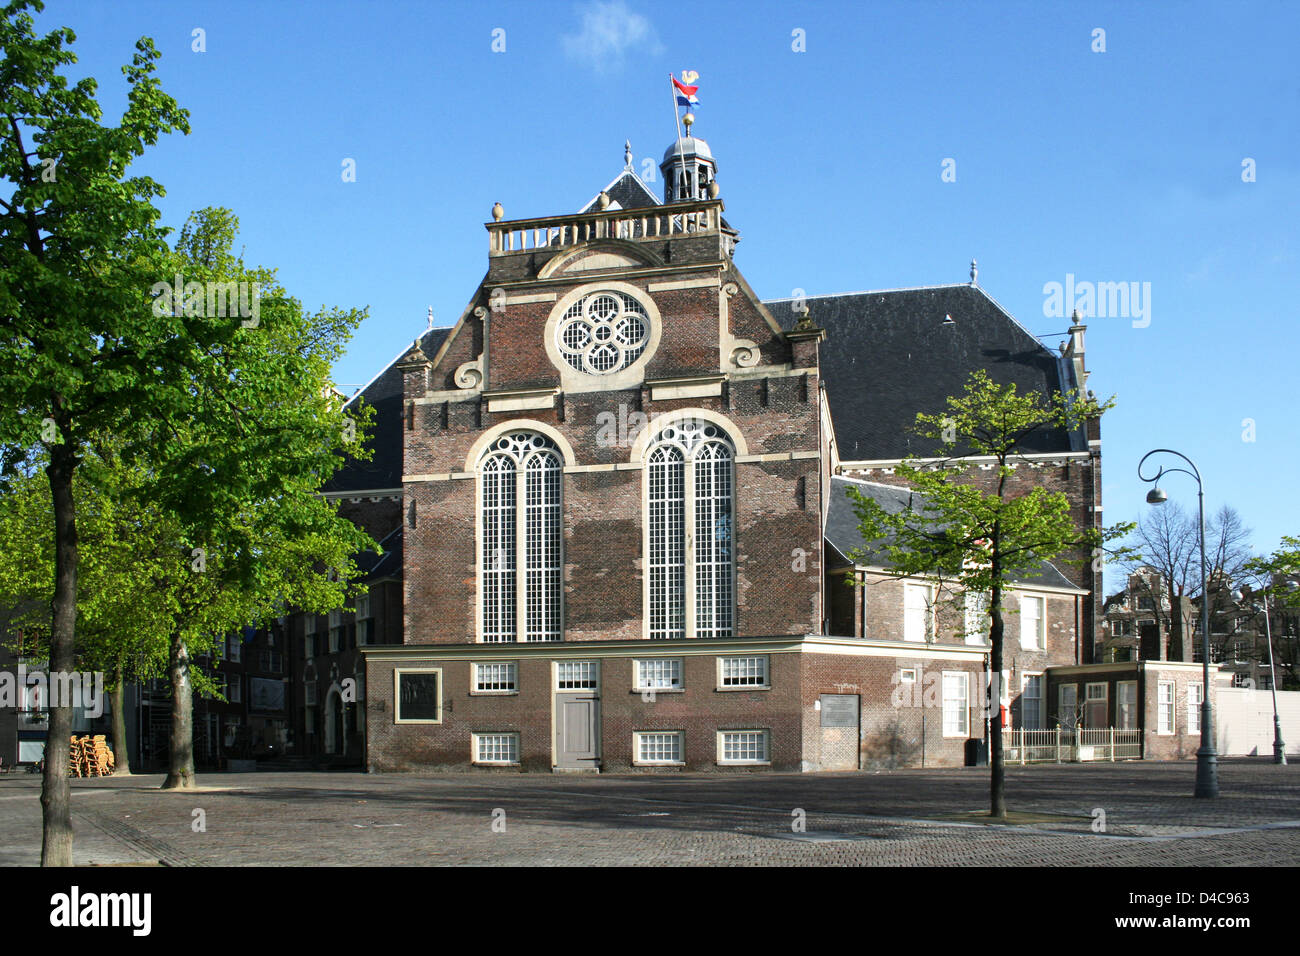 The Netherlands Holland Amsterdam Noorderkerk Church 1623 Architect Hendrick de Keyser Prinsengracht Noordermarkt 44 Stock Photo